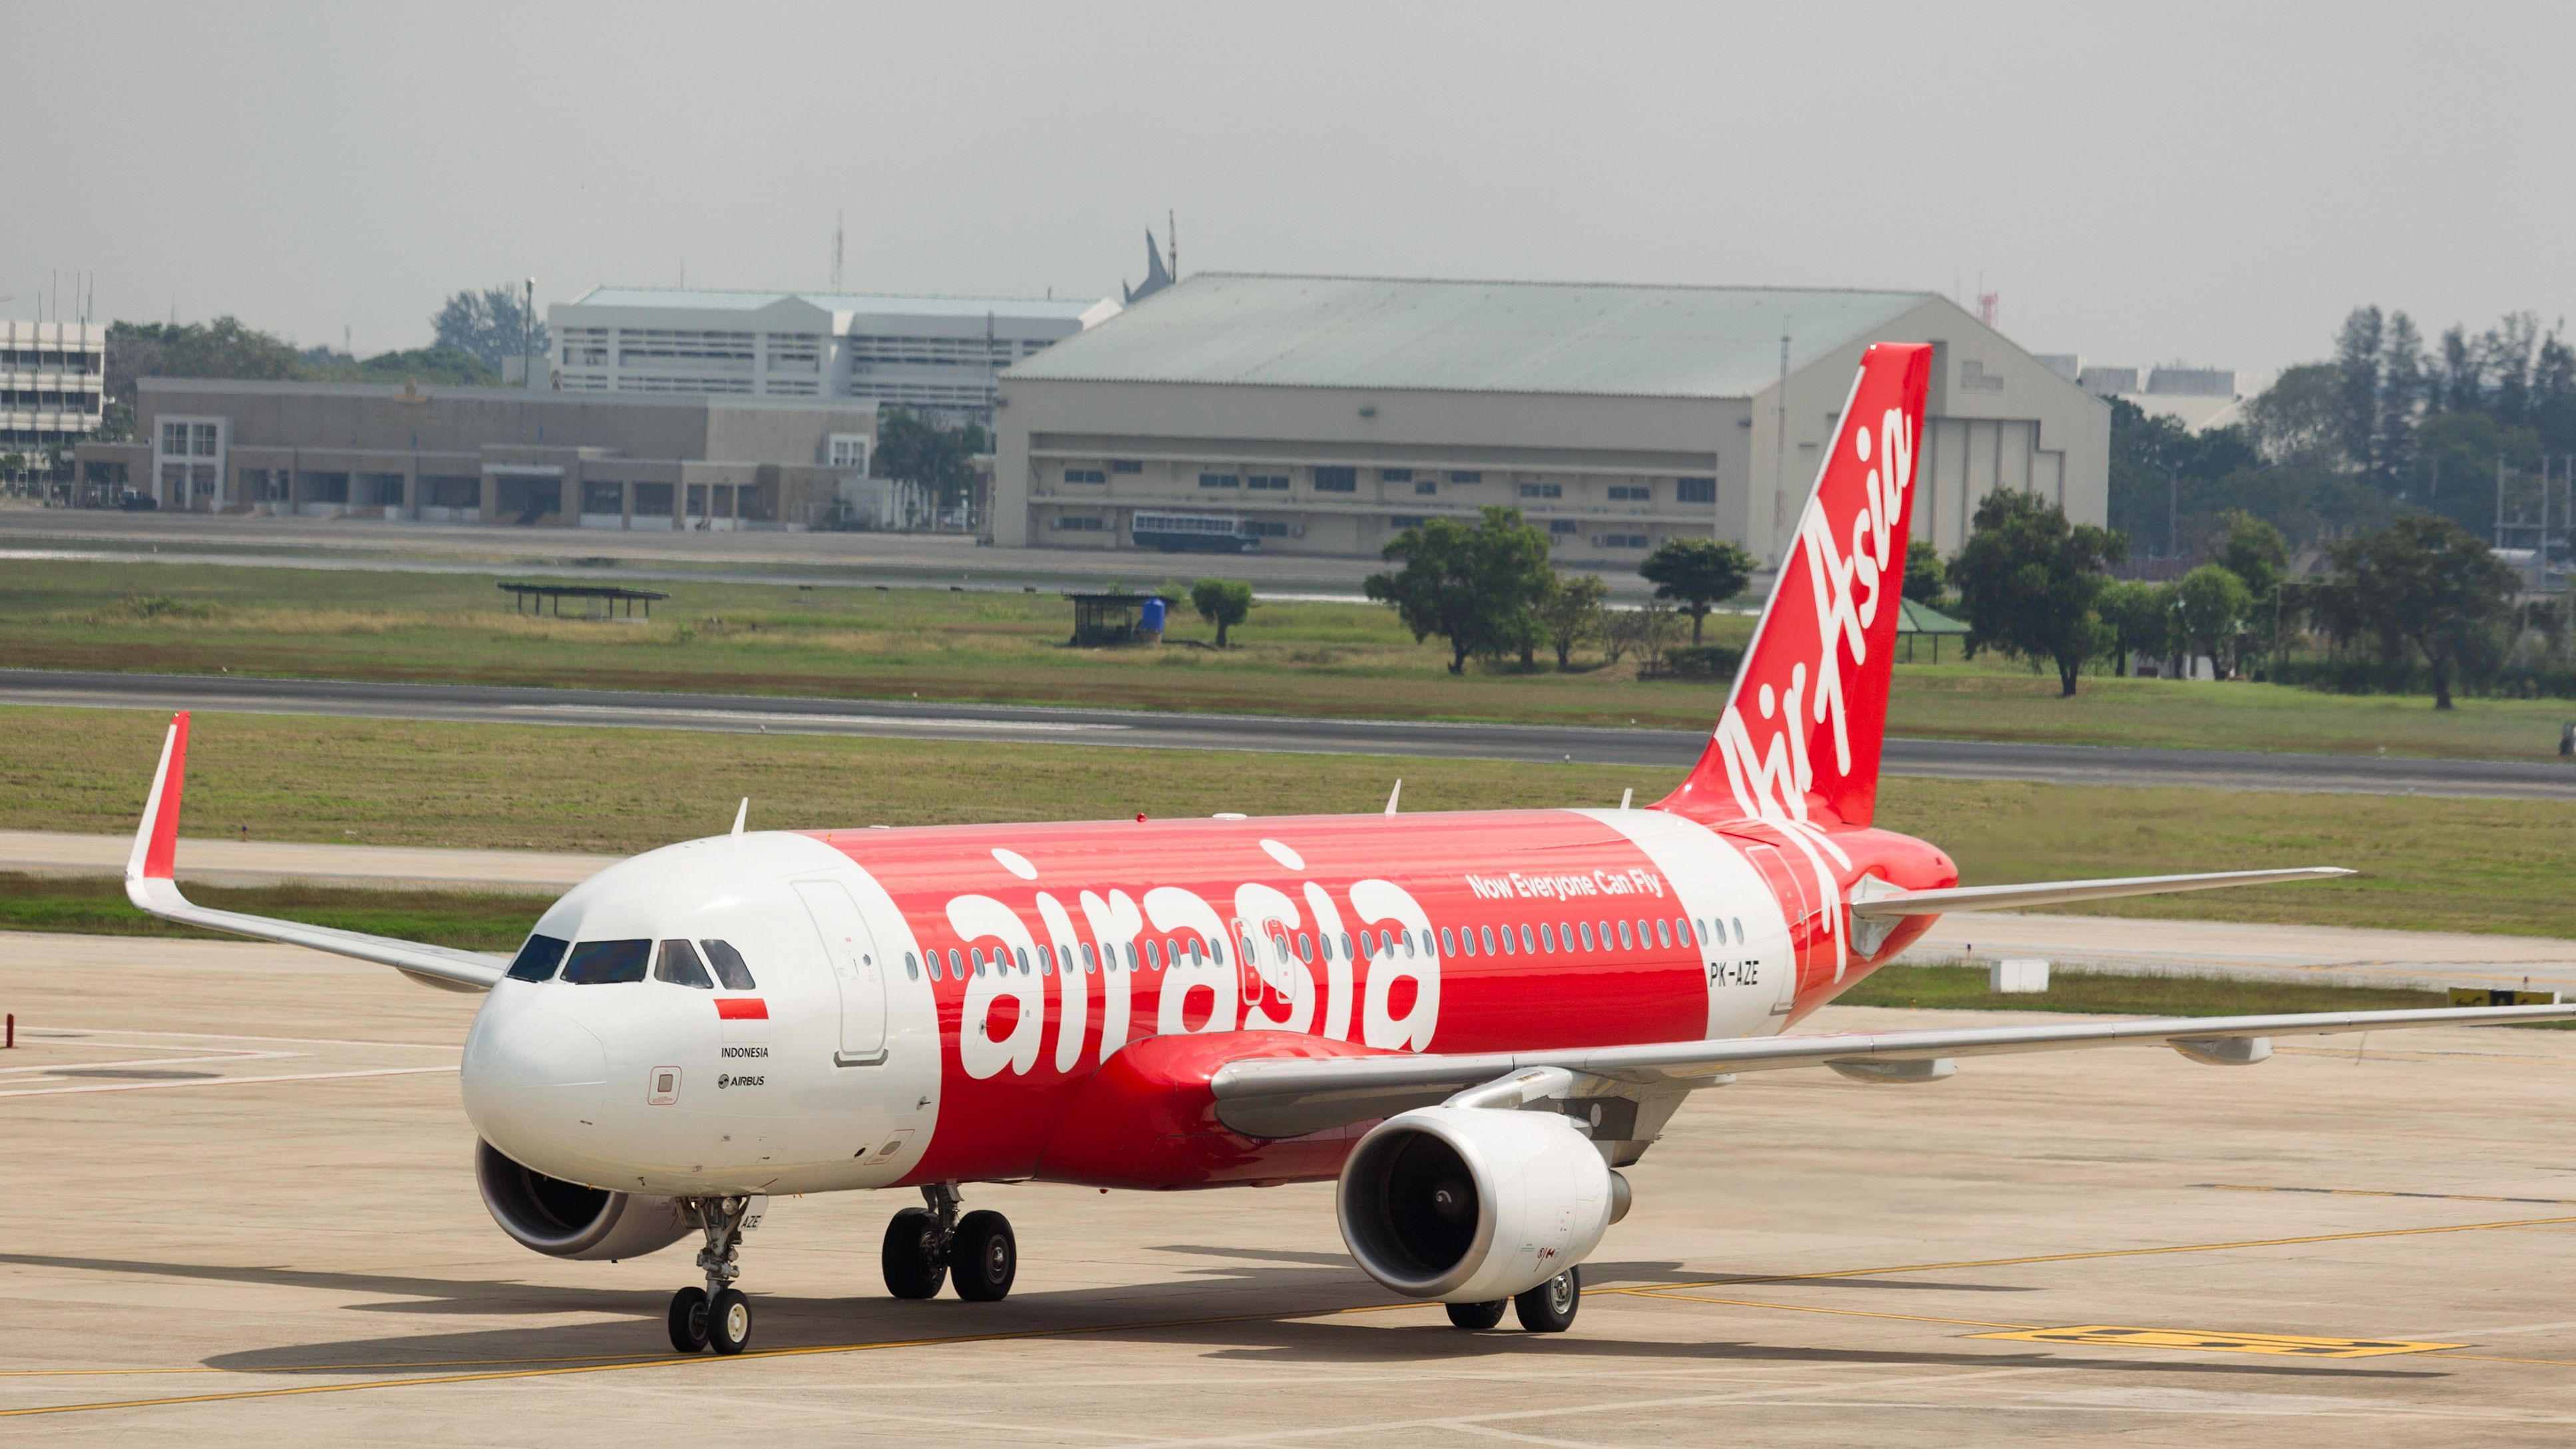 <div class="paragraphs"><p>Representative image showing an&nbsp;AirAsia flight.</p></div>